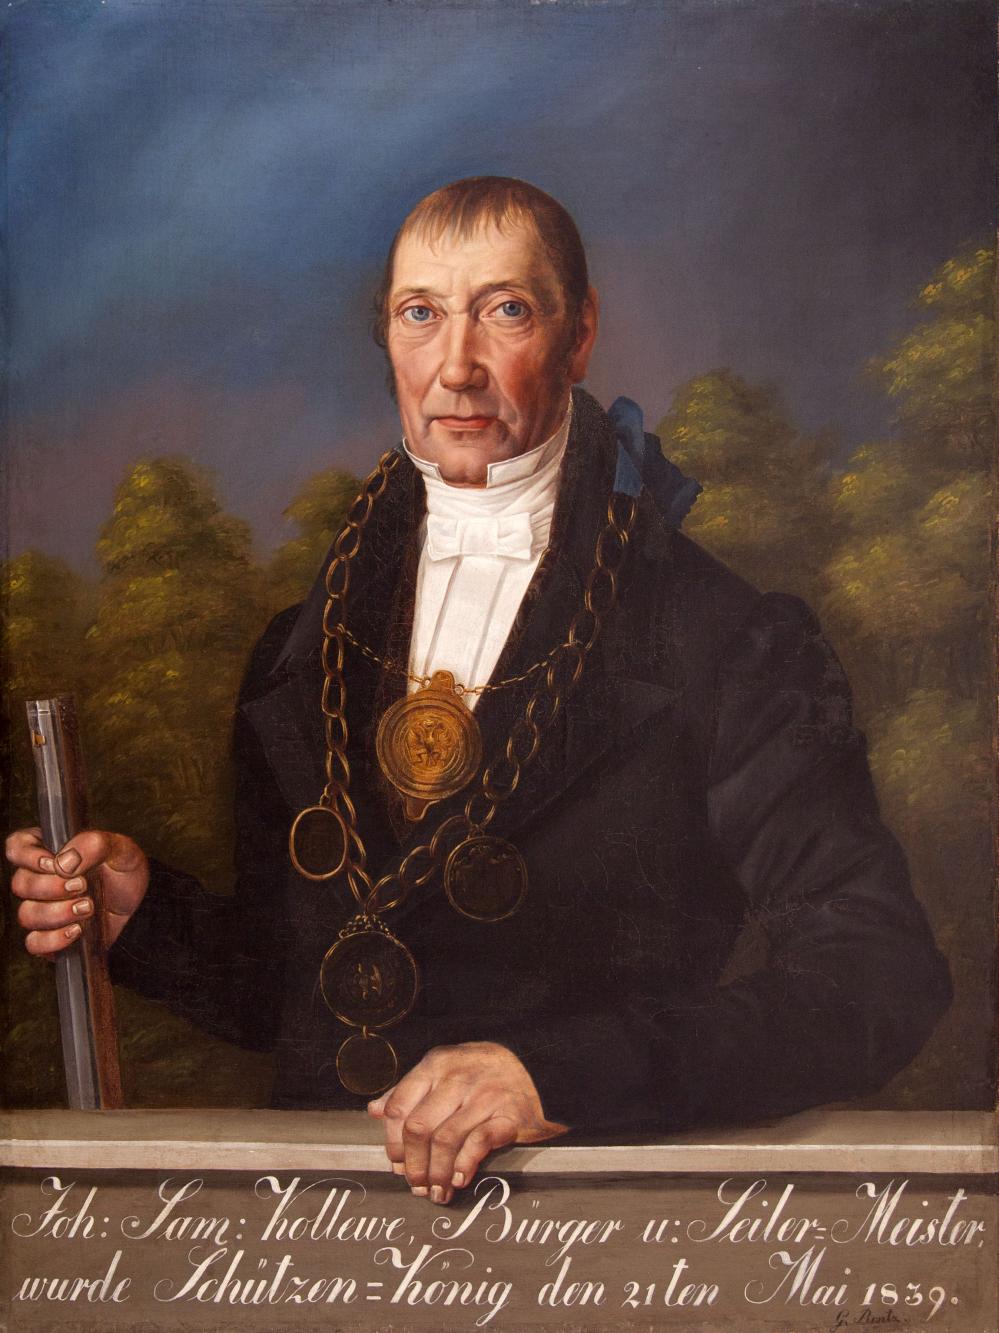 Portret króla kurkowego Johanna Samuela Kollewe